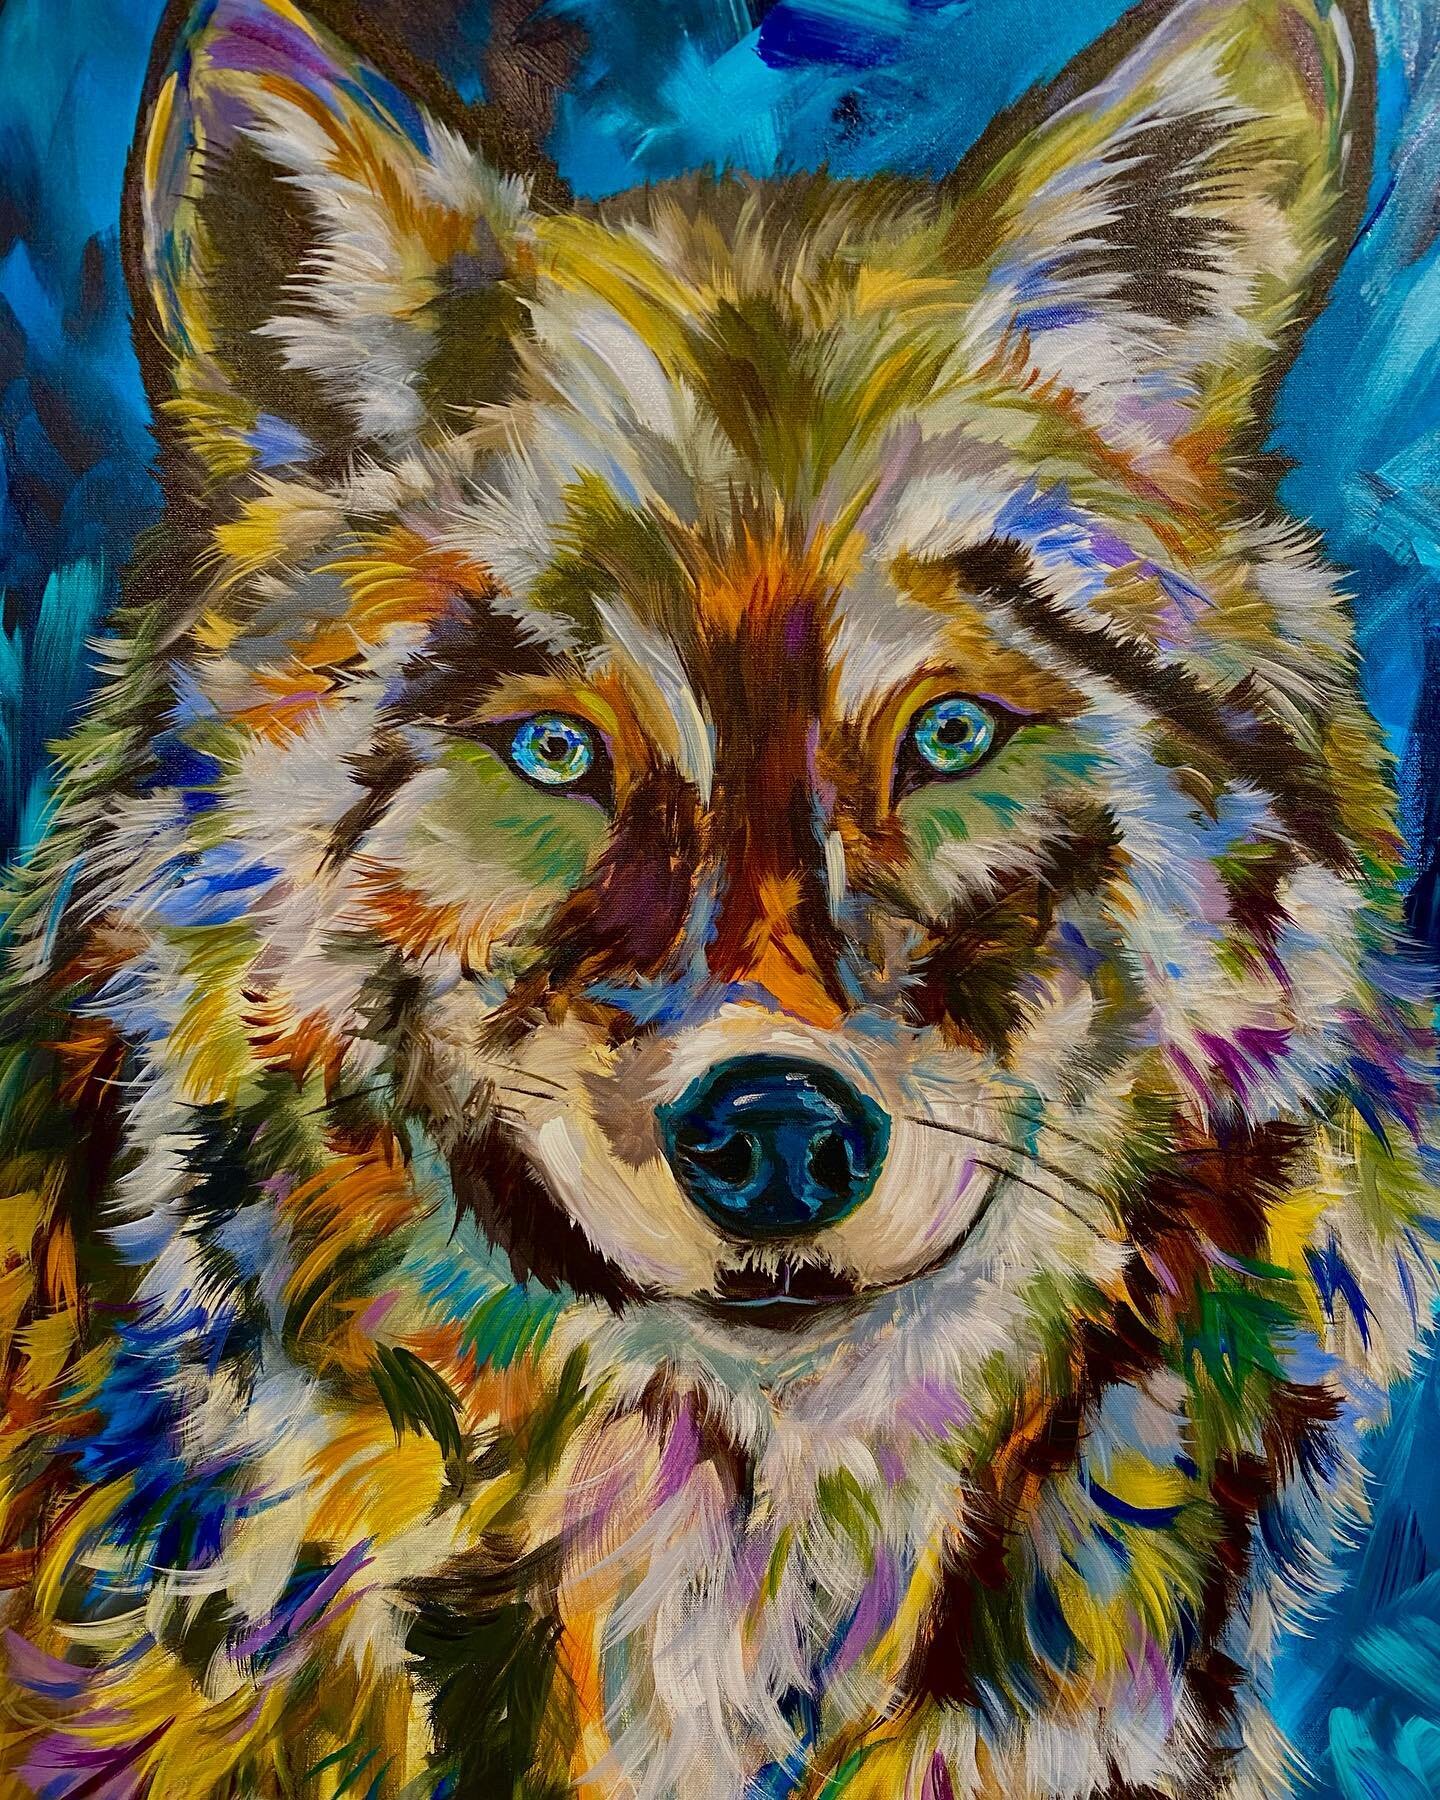 Wolves on the move. #wolf  #animals #painting #artwork #interiordesign #art #wolves #soulfulart #lindaisrael #onetowatch #colorfulart #contemporaryart #contemporarypainting #wildlife #wolves